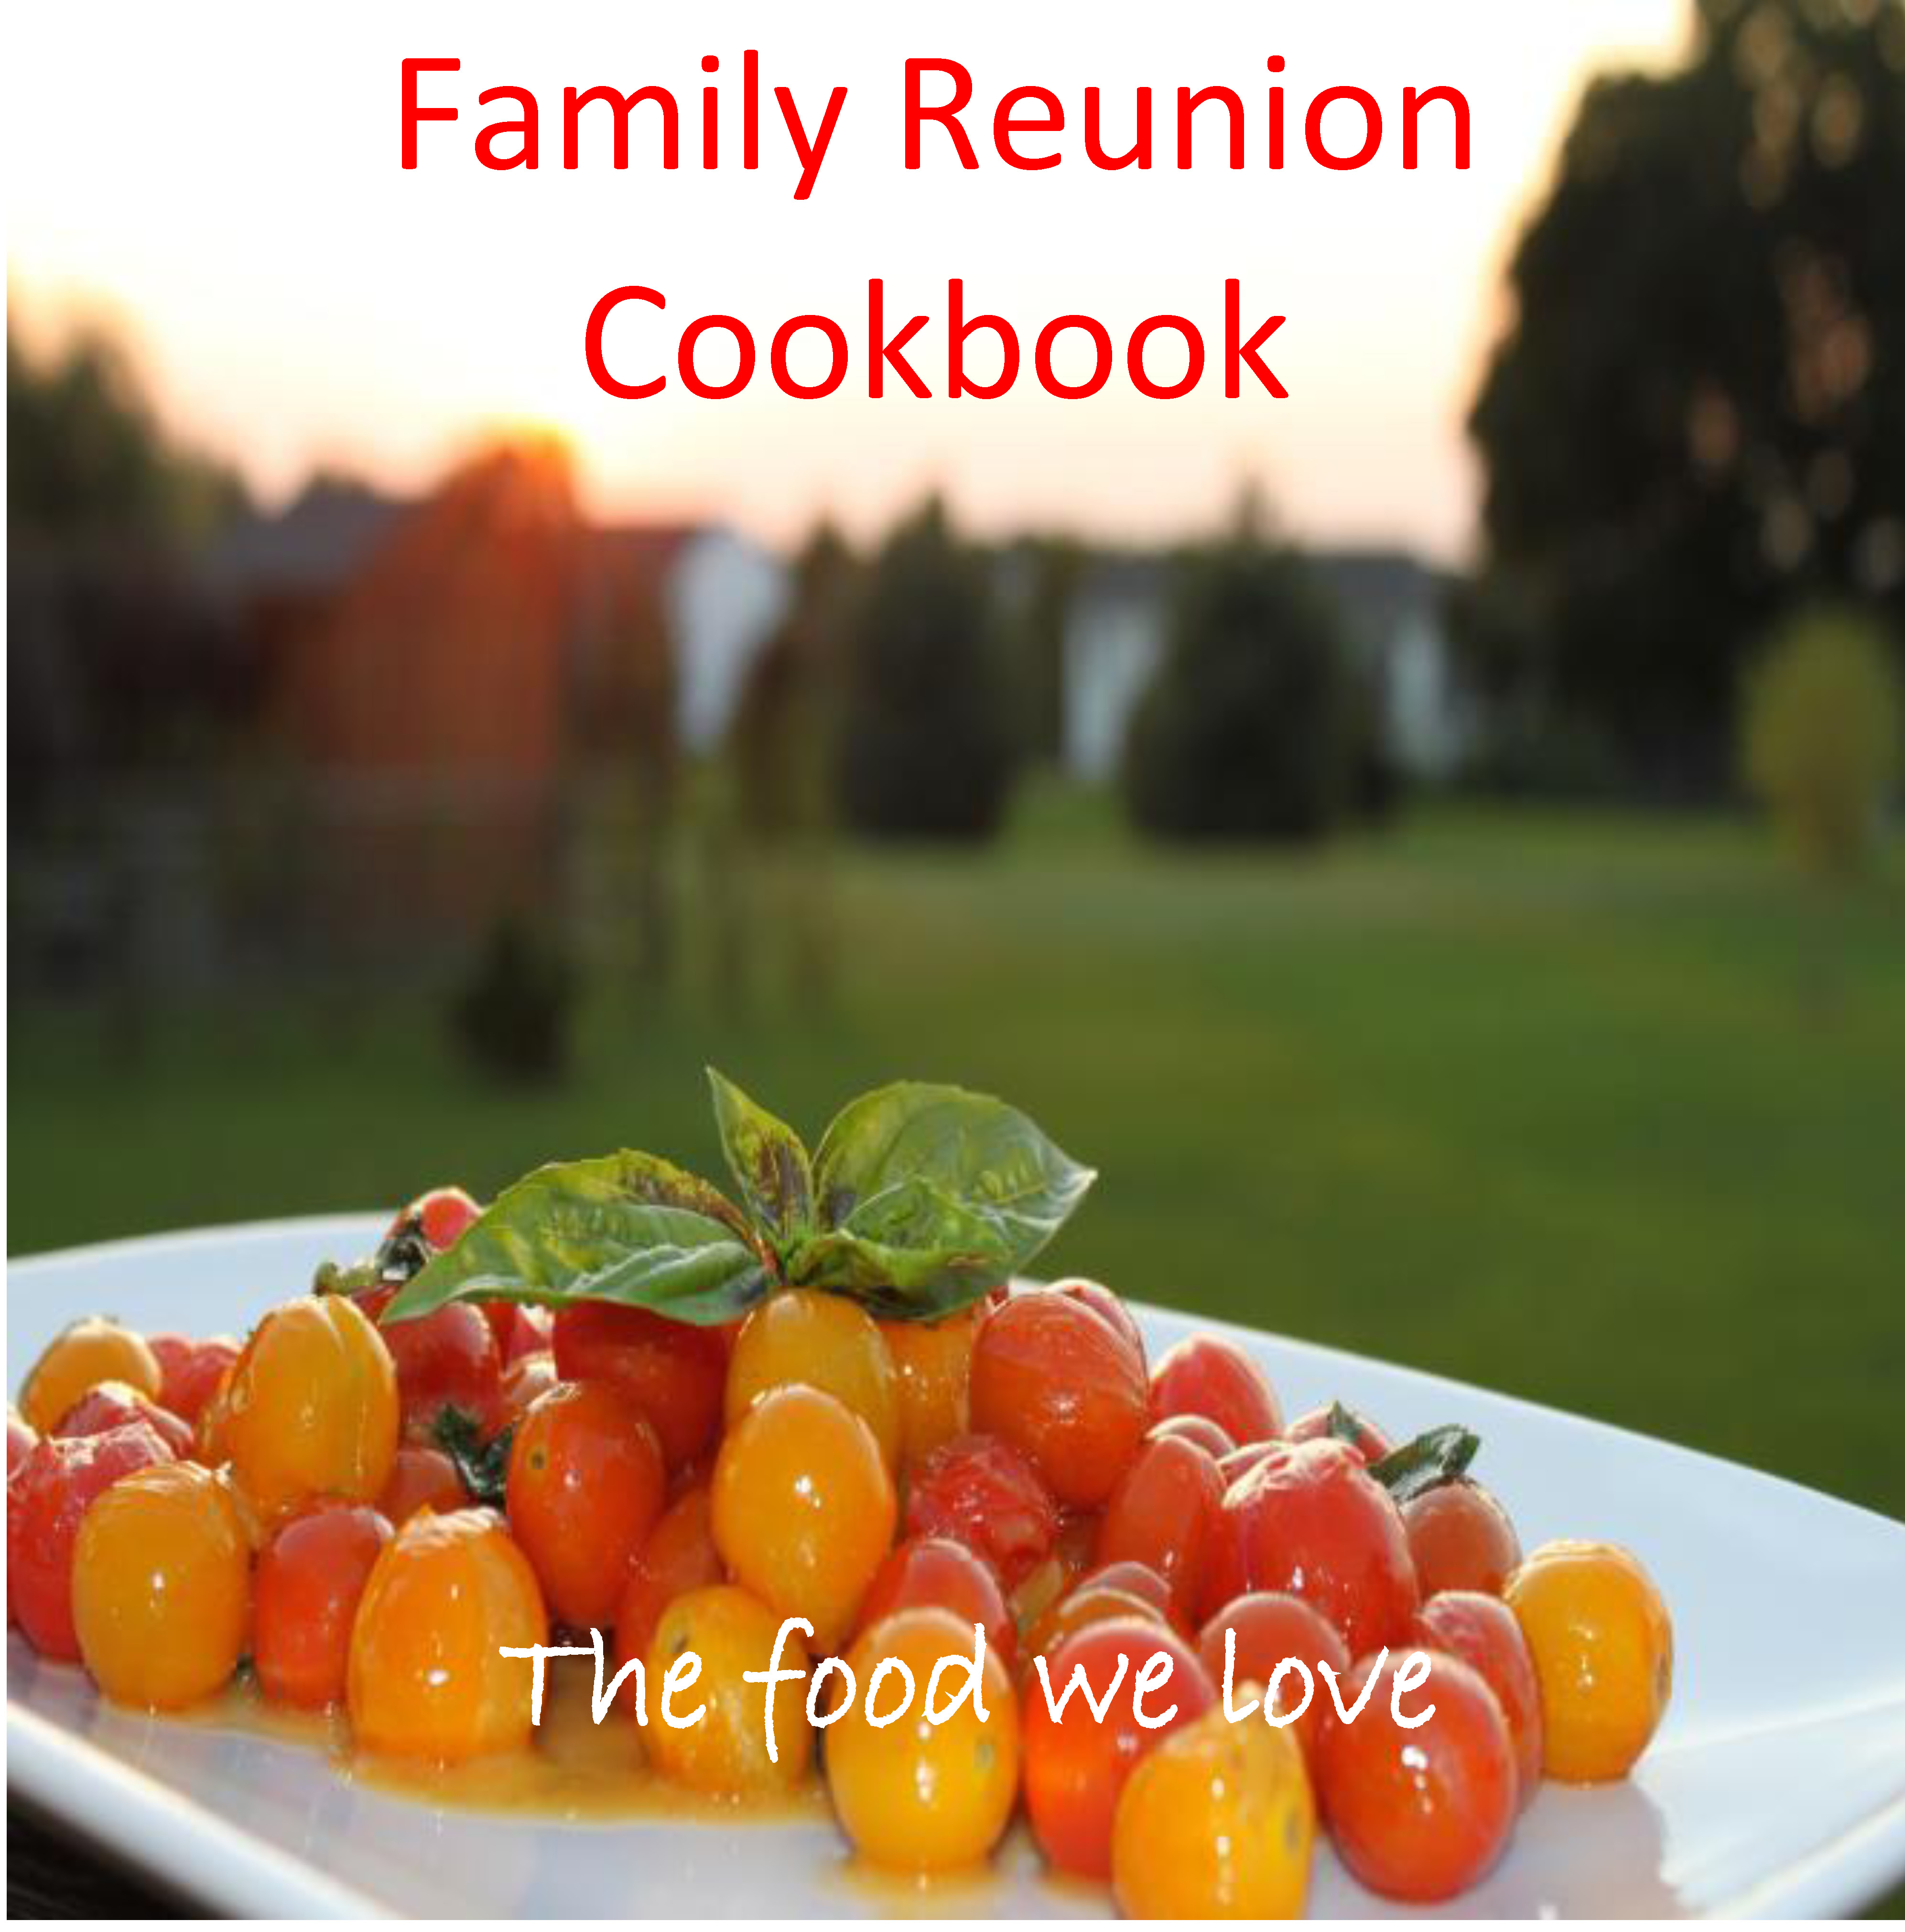 Family Cookbook – Family Reunion